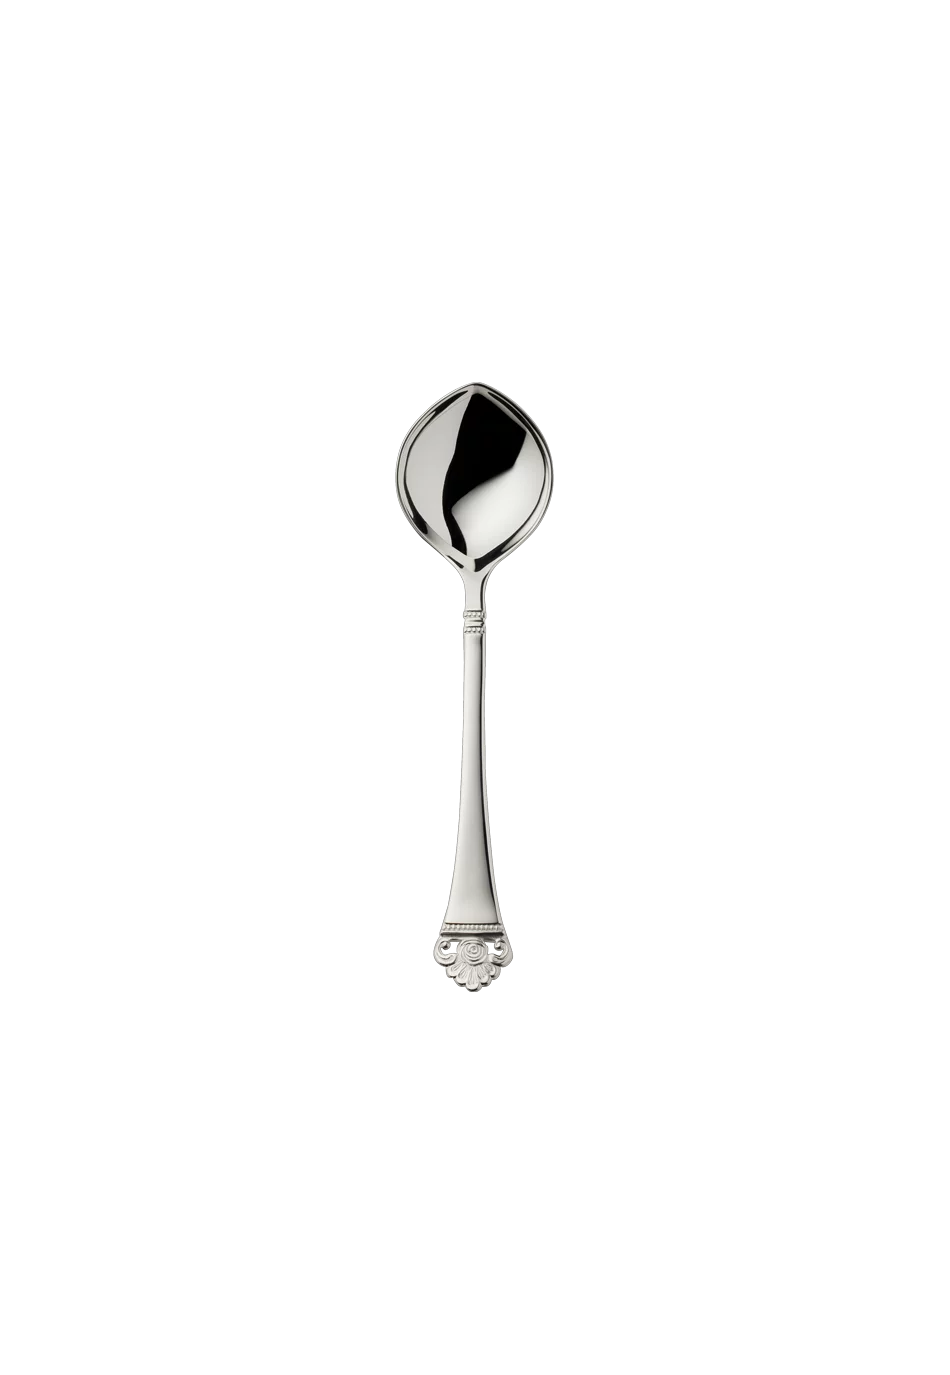 Rosenmuster Sugar Spoon (925 Sterling Silver)